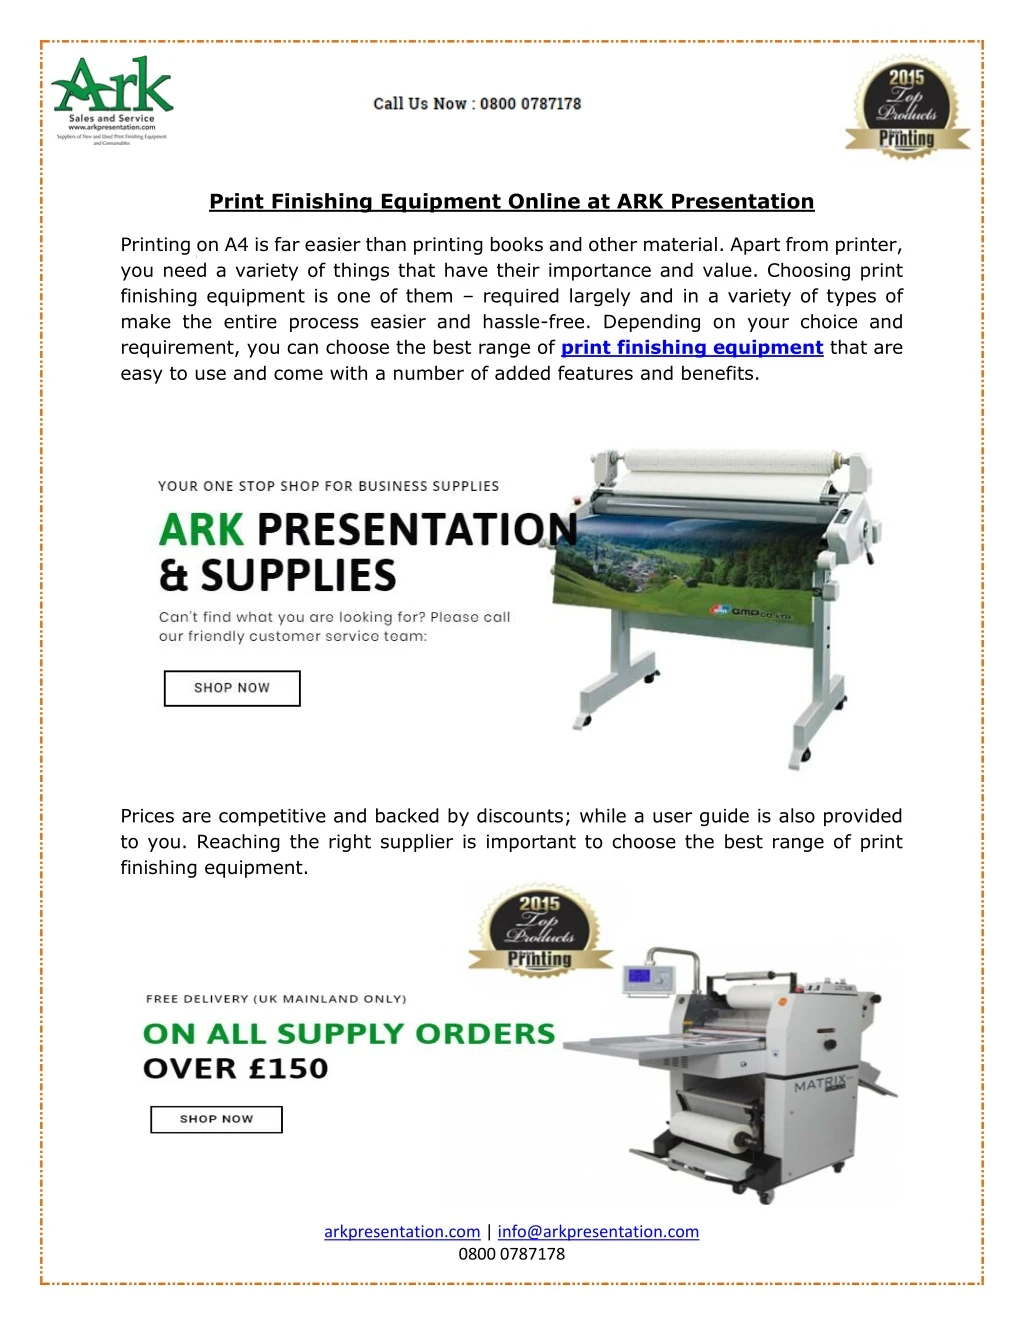 print finishing equipment online